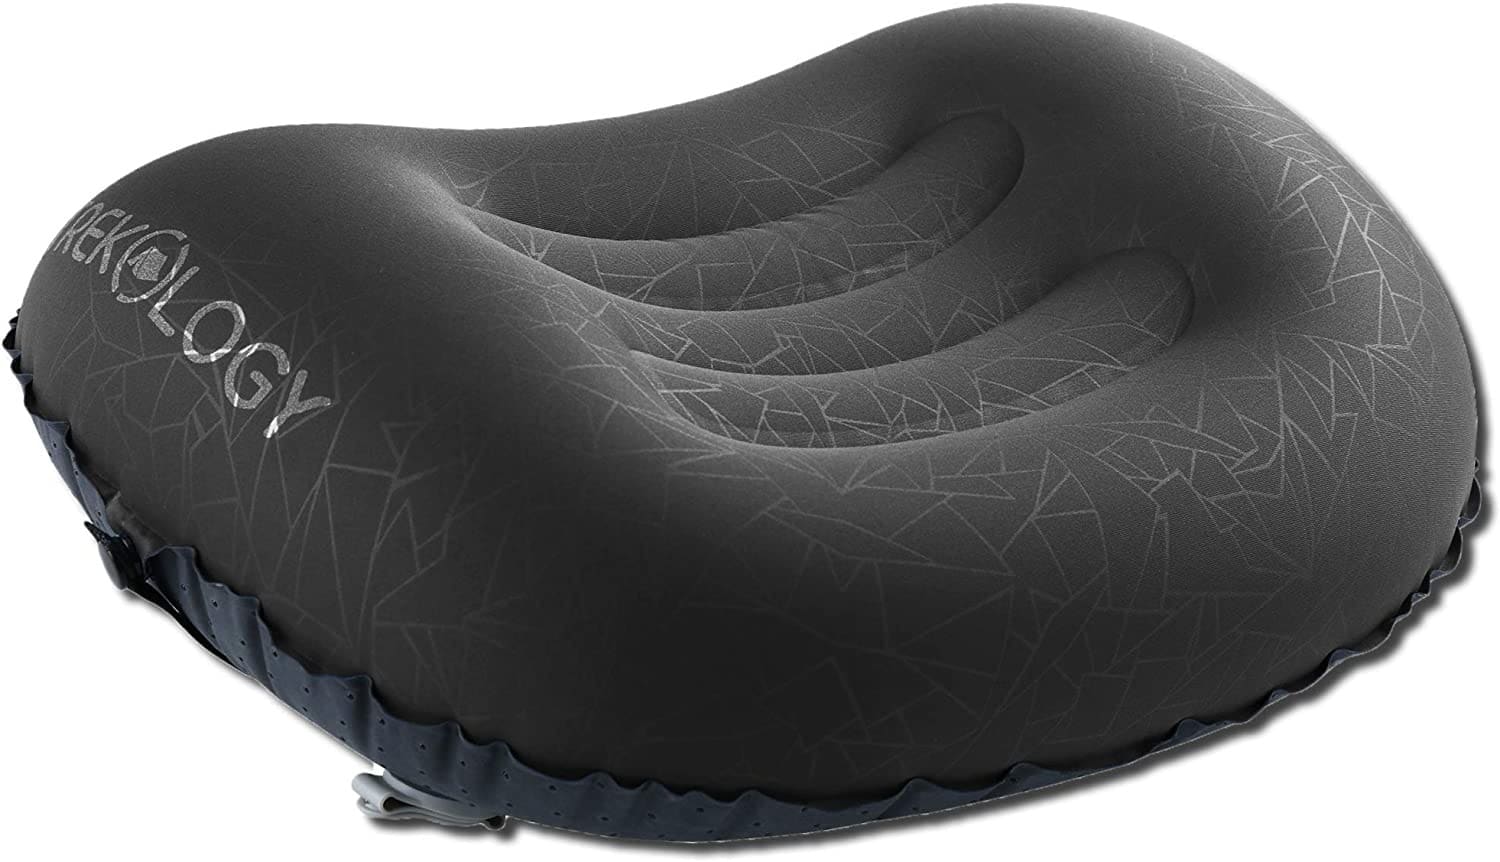 Trekology Aluft 2.0 Inflatable Pillow